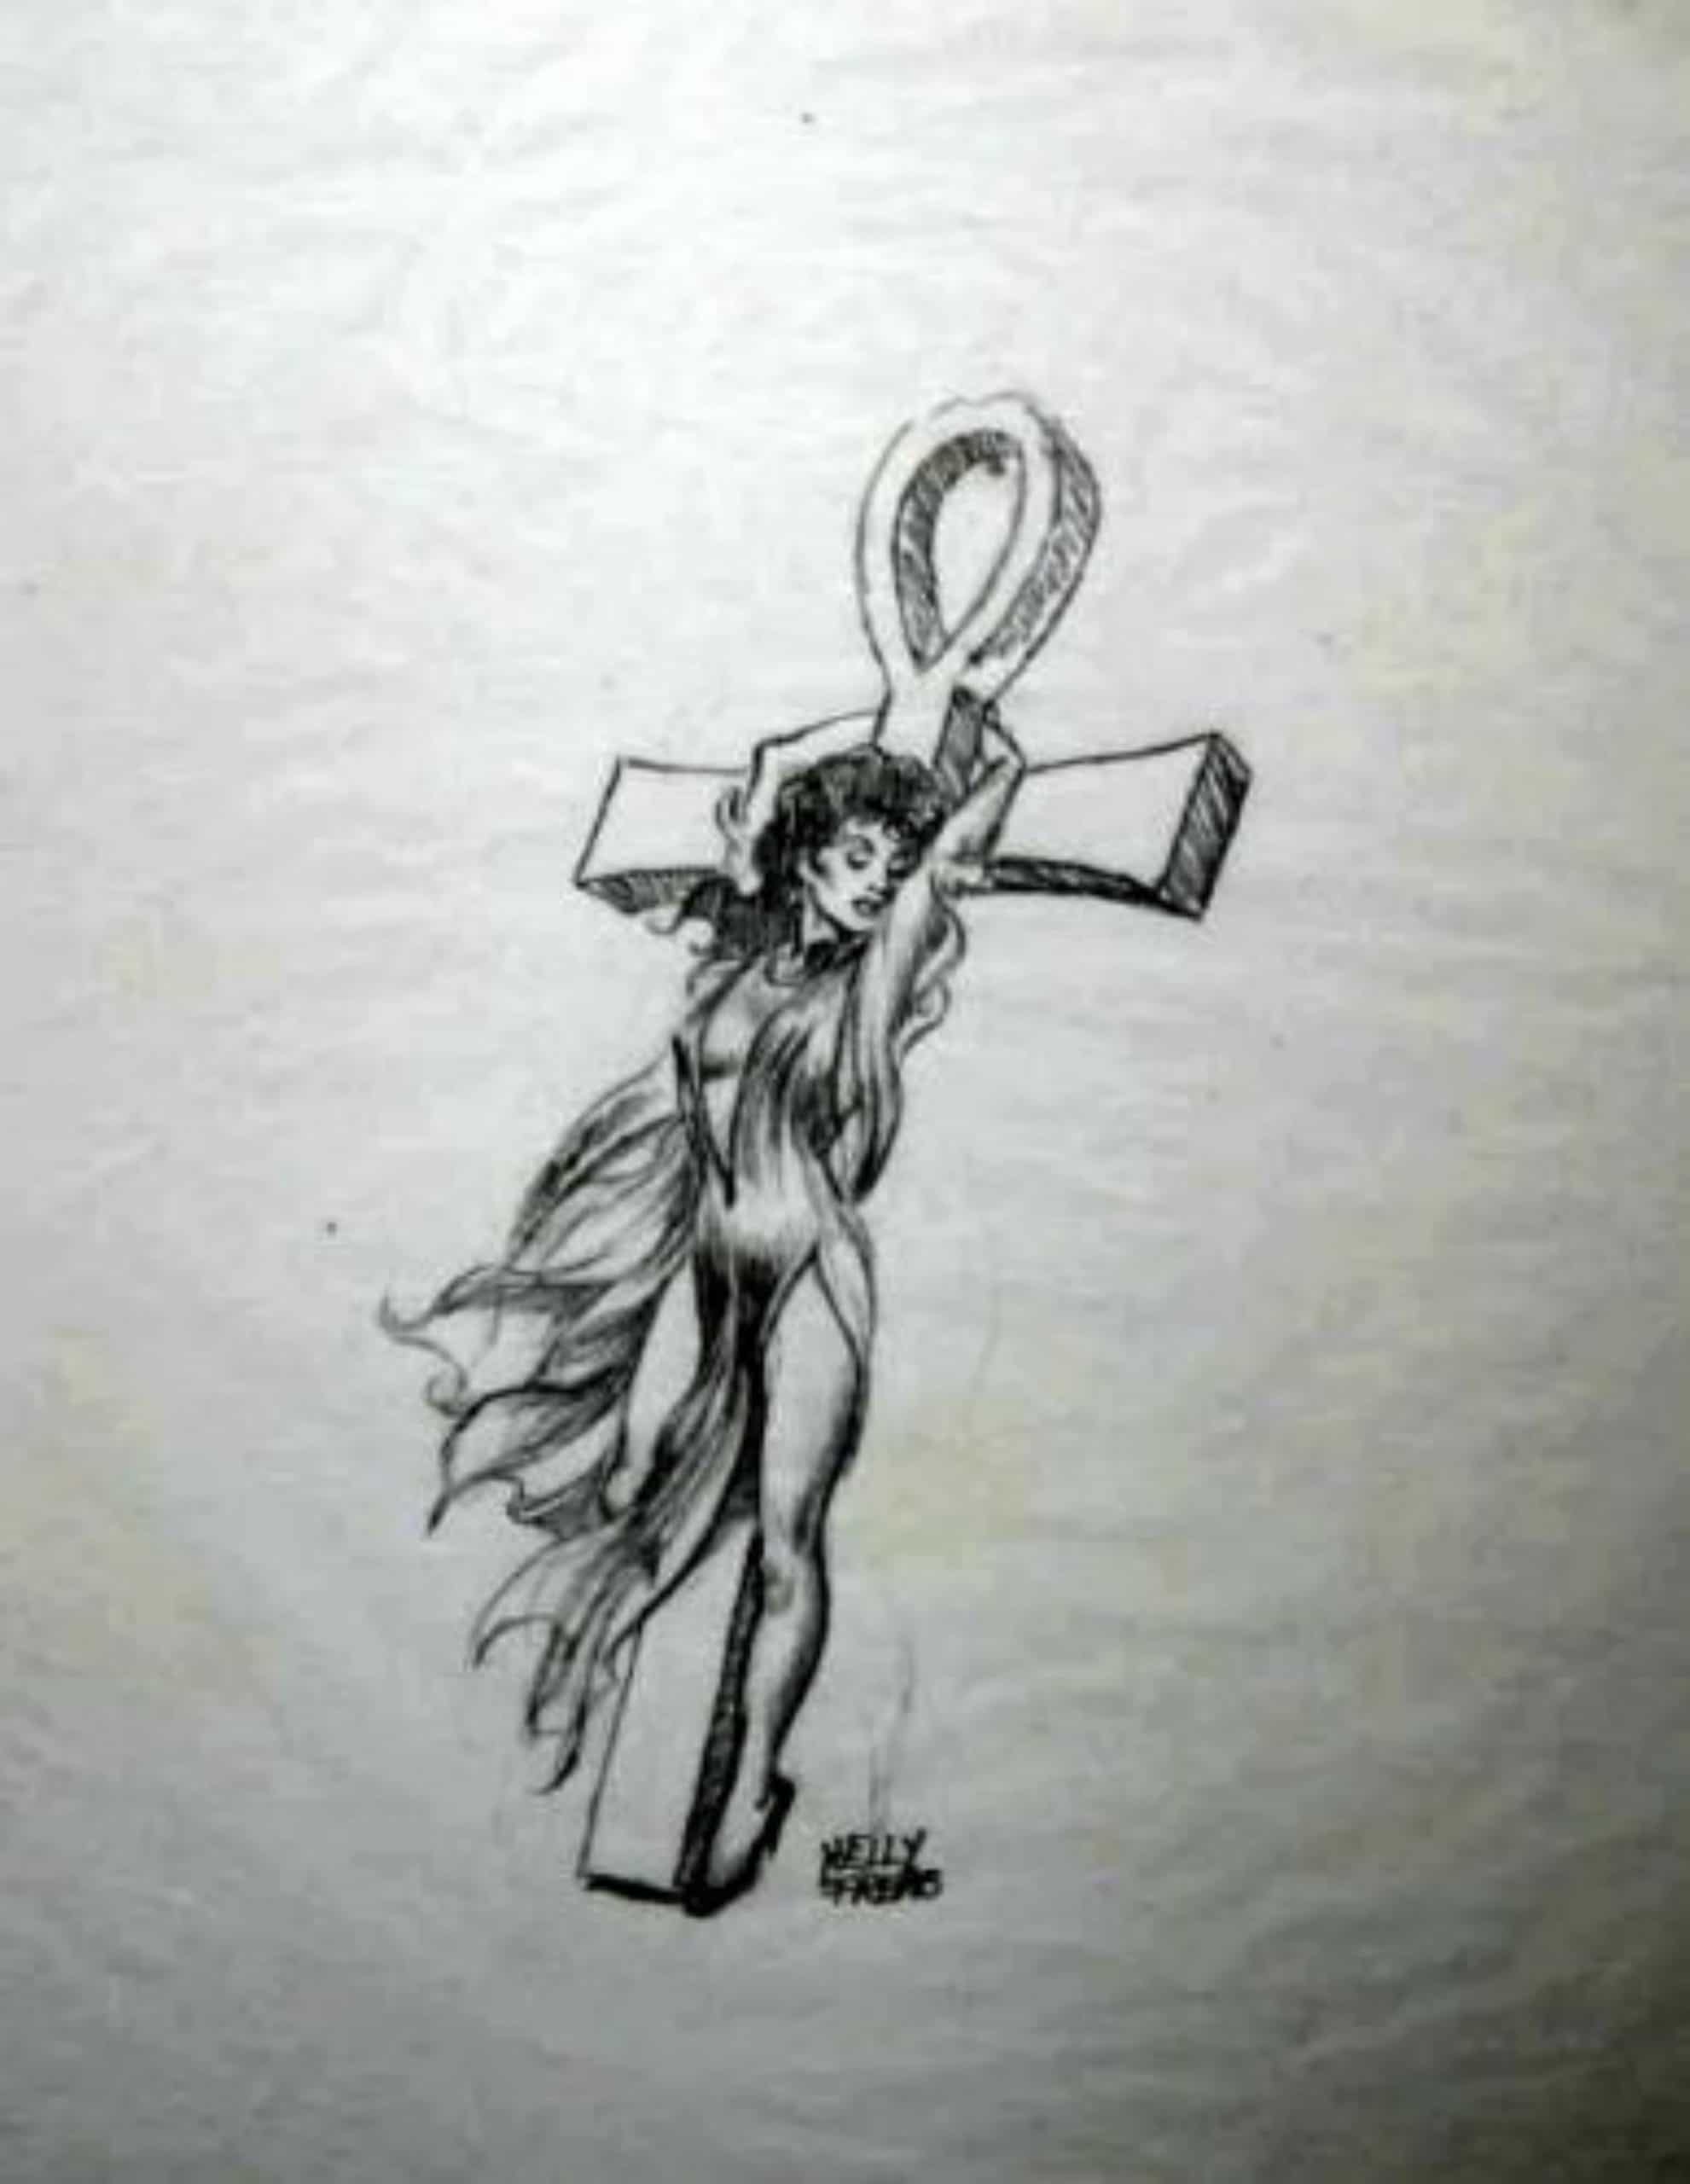 pencil drawings of crosses